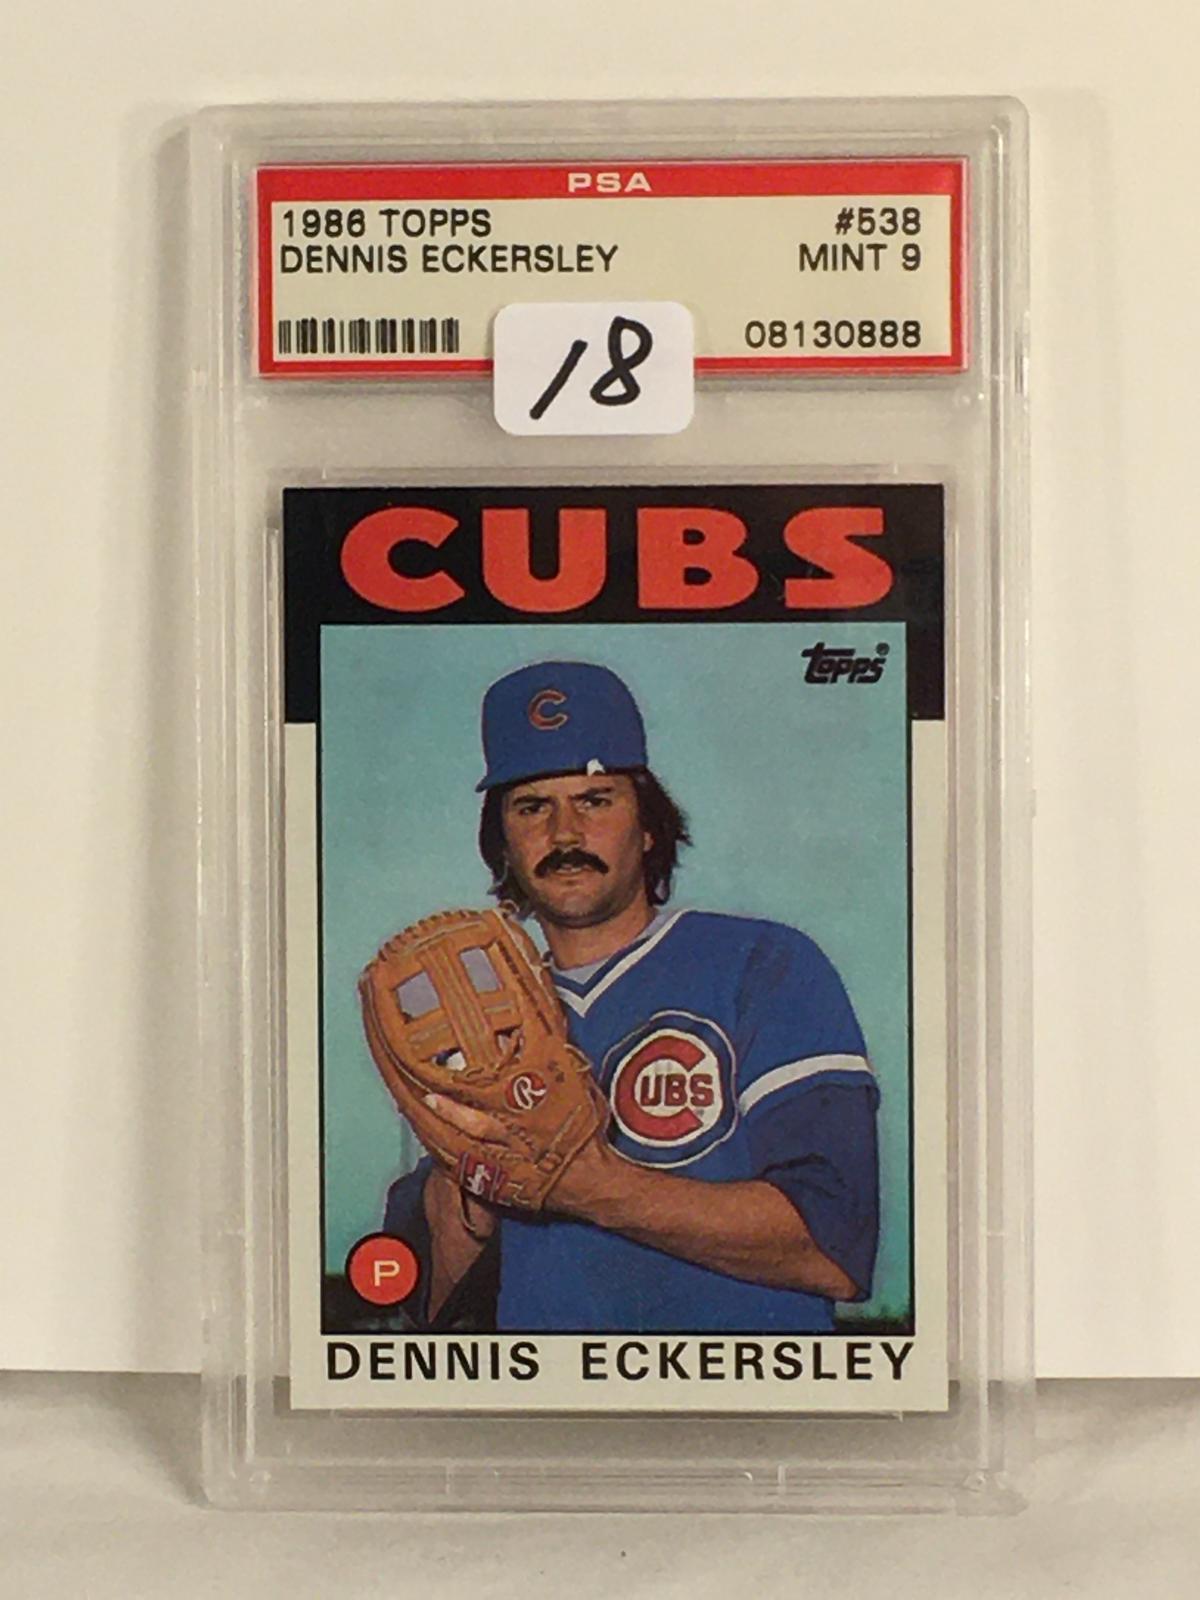 Collector PSA Graded 1986 Vintage Topps Dennis Eckersley #538 Mint 9 #08130888 Baseball Card